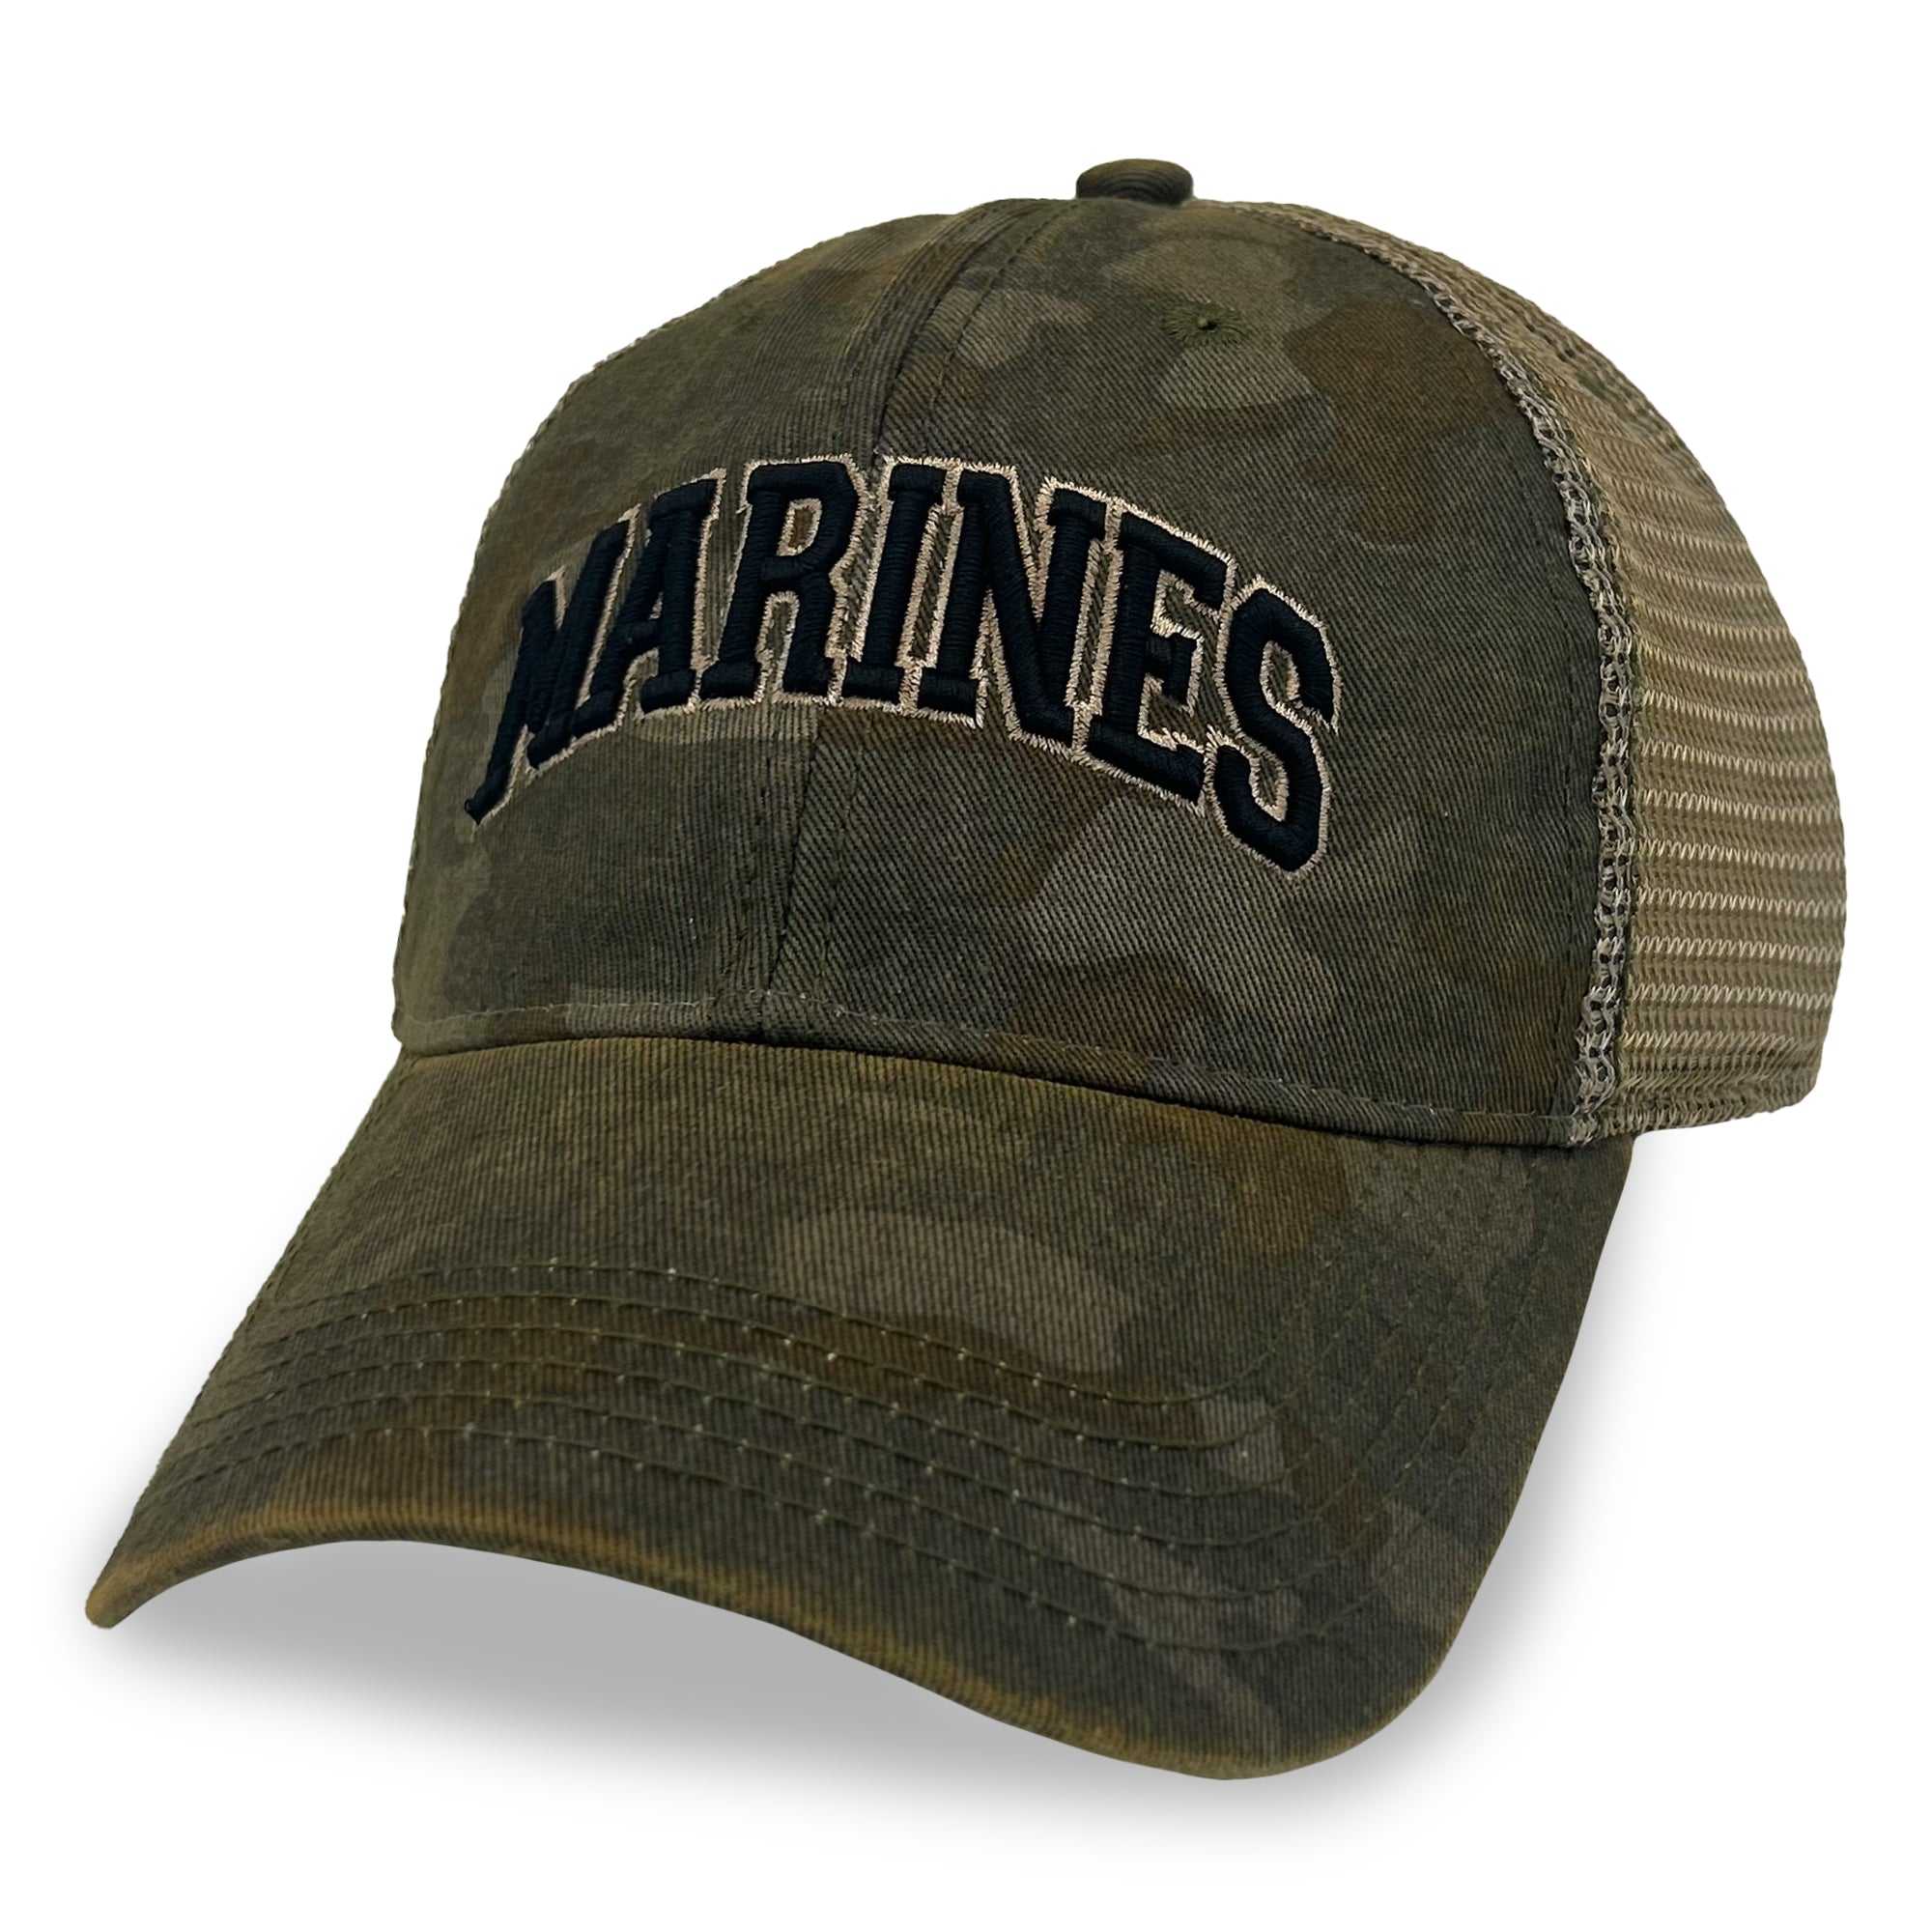 Marines Arch Old Favorite Trucker Hat (Green Field Camo)